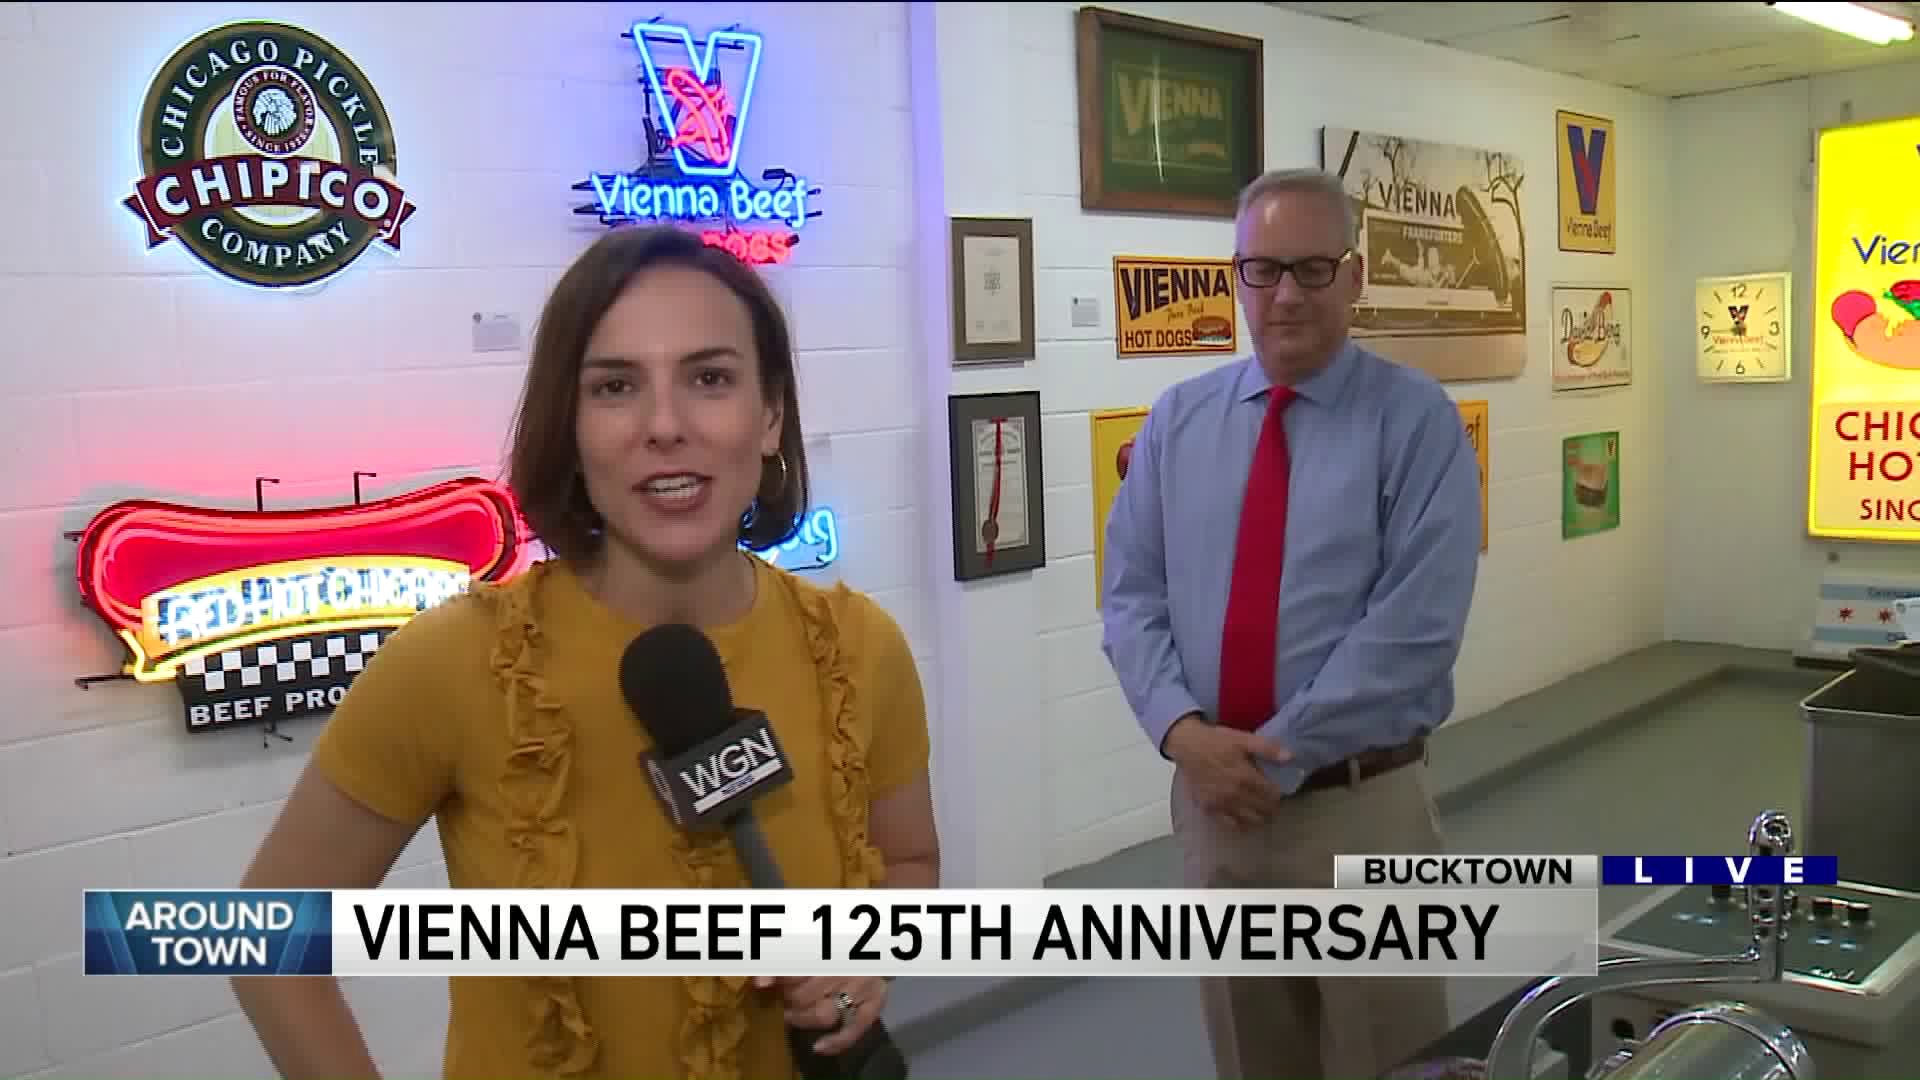 Around Town celebrates the 125th Anniversary of Vienna Beef